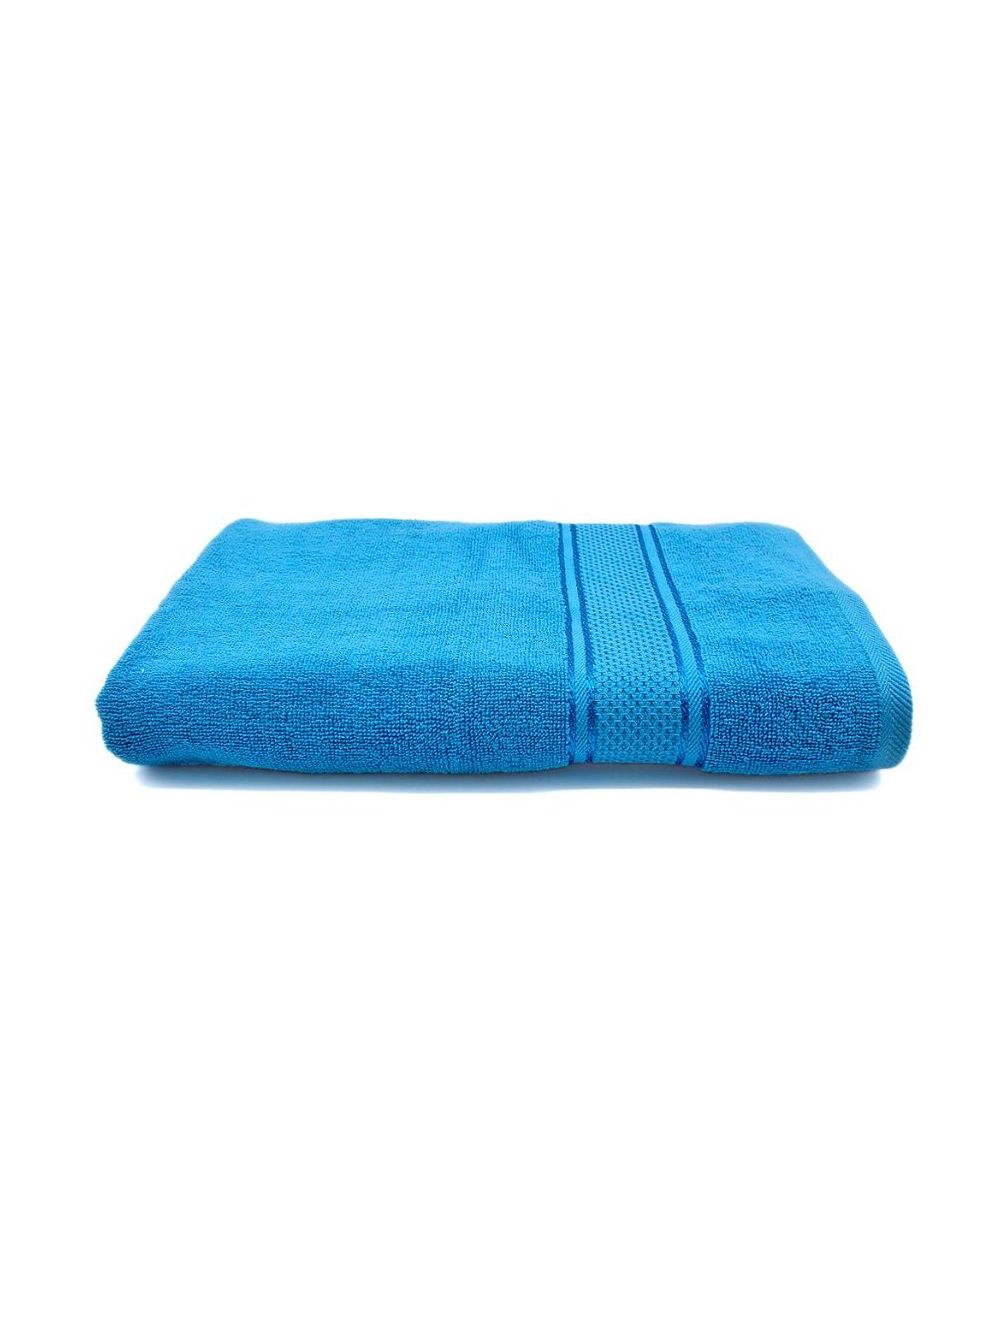 Rishahome 100% Cotton Bath Towel, Premium Collection, Blue -14RHFT050